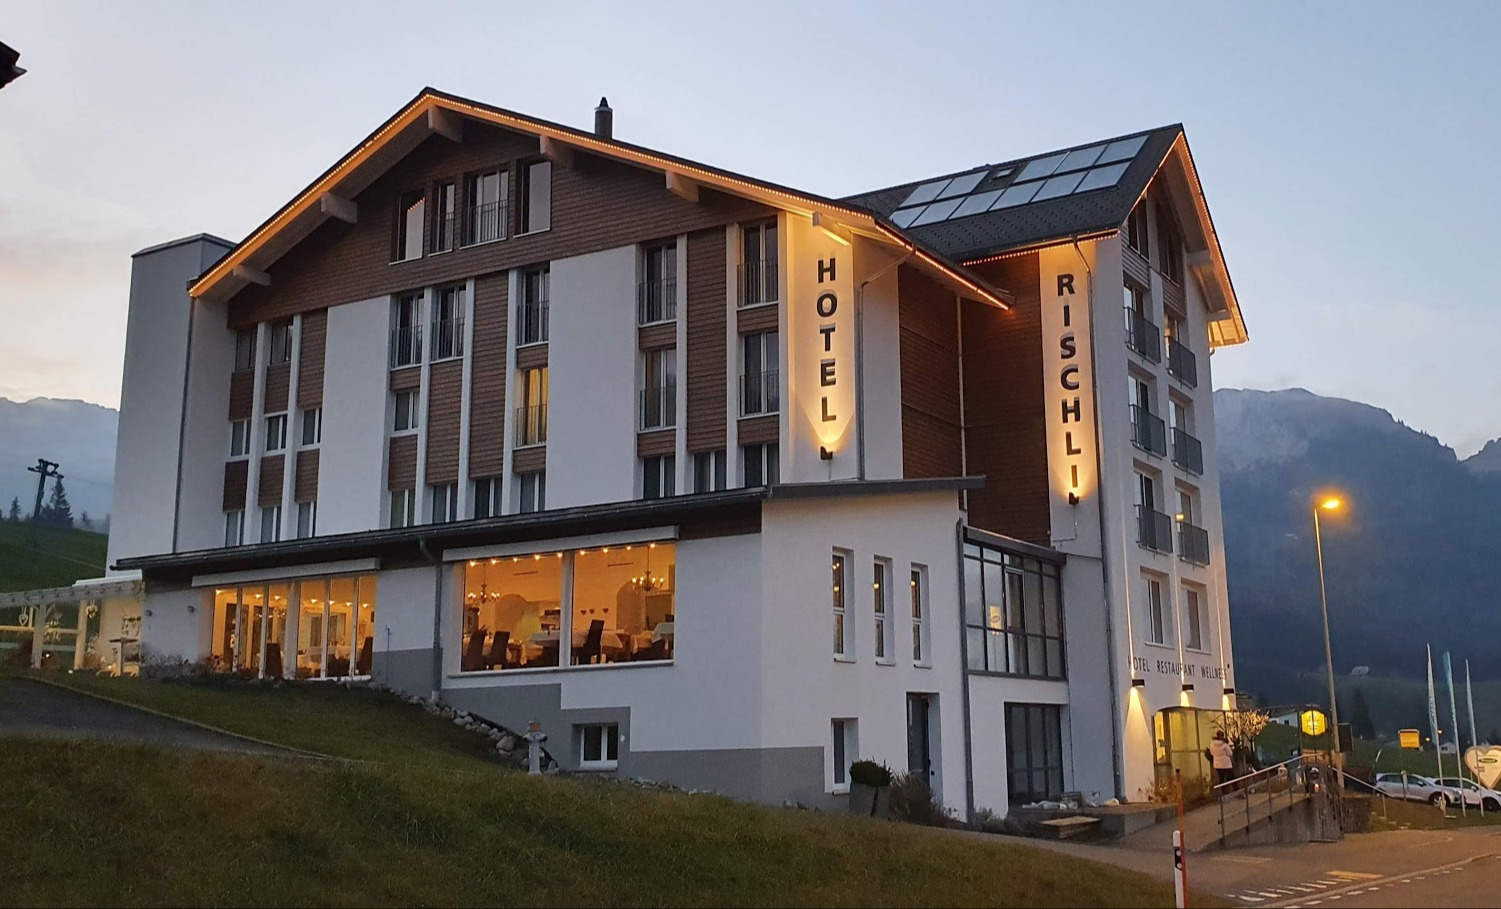 Objekt: Hotel Rischli Sörenberg/3 x Silverwood/ Ausführung 2020